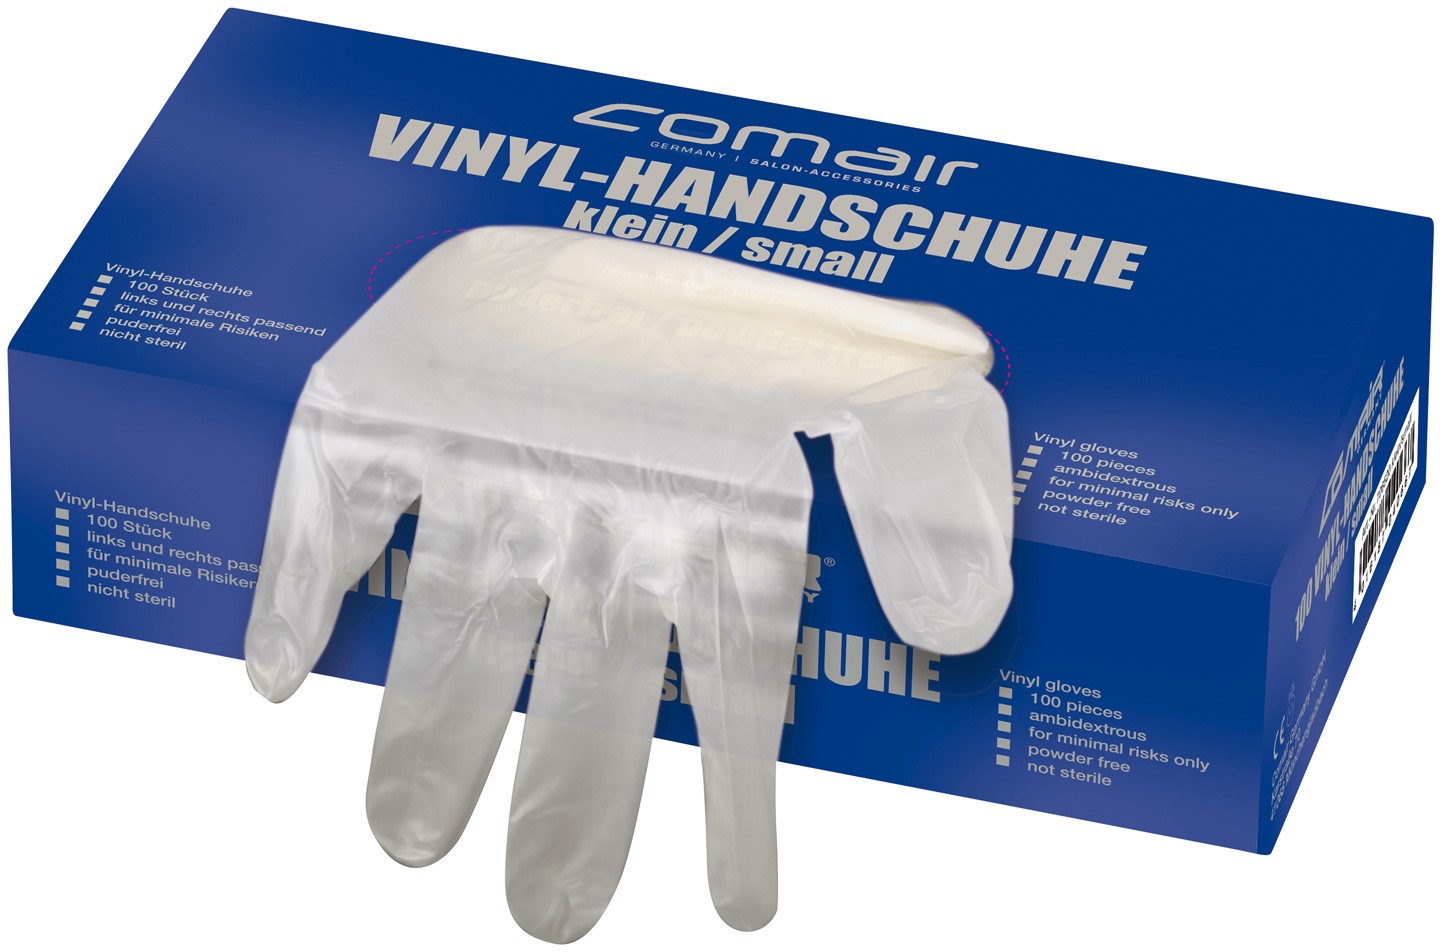  Comair Vinyl gloves large 